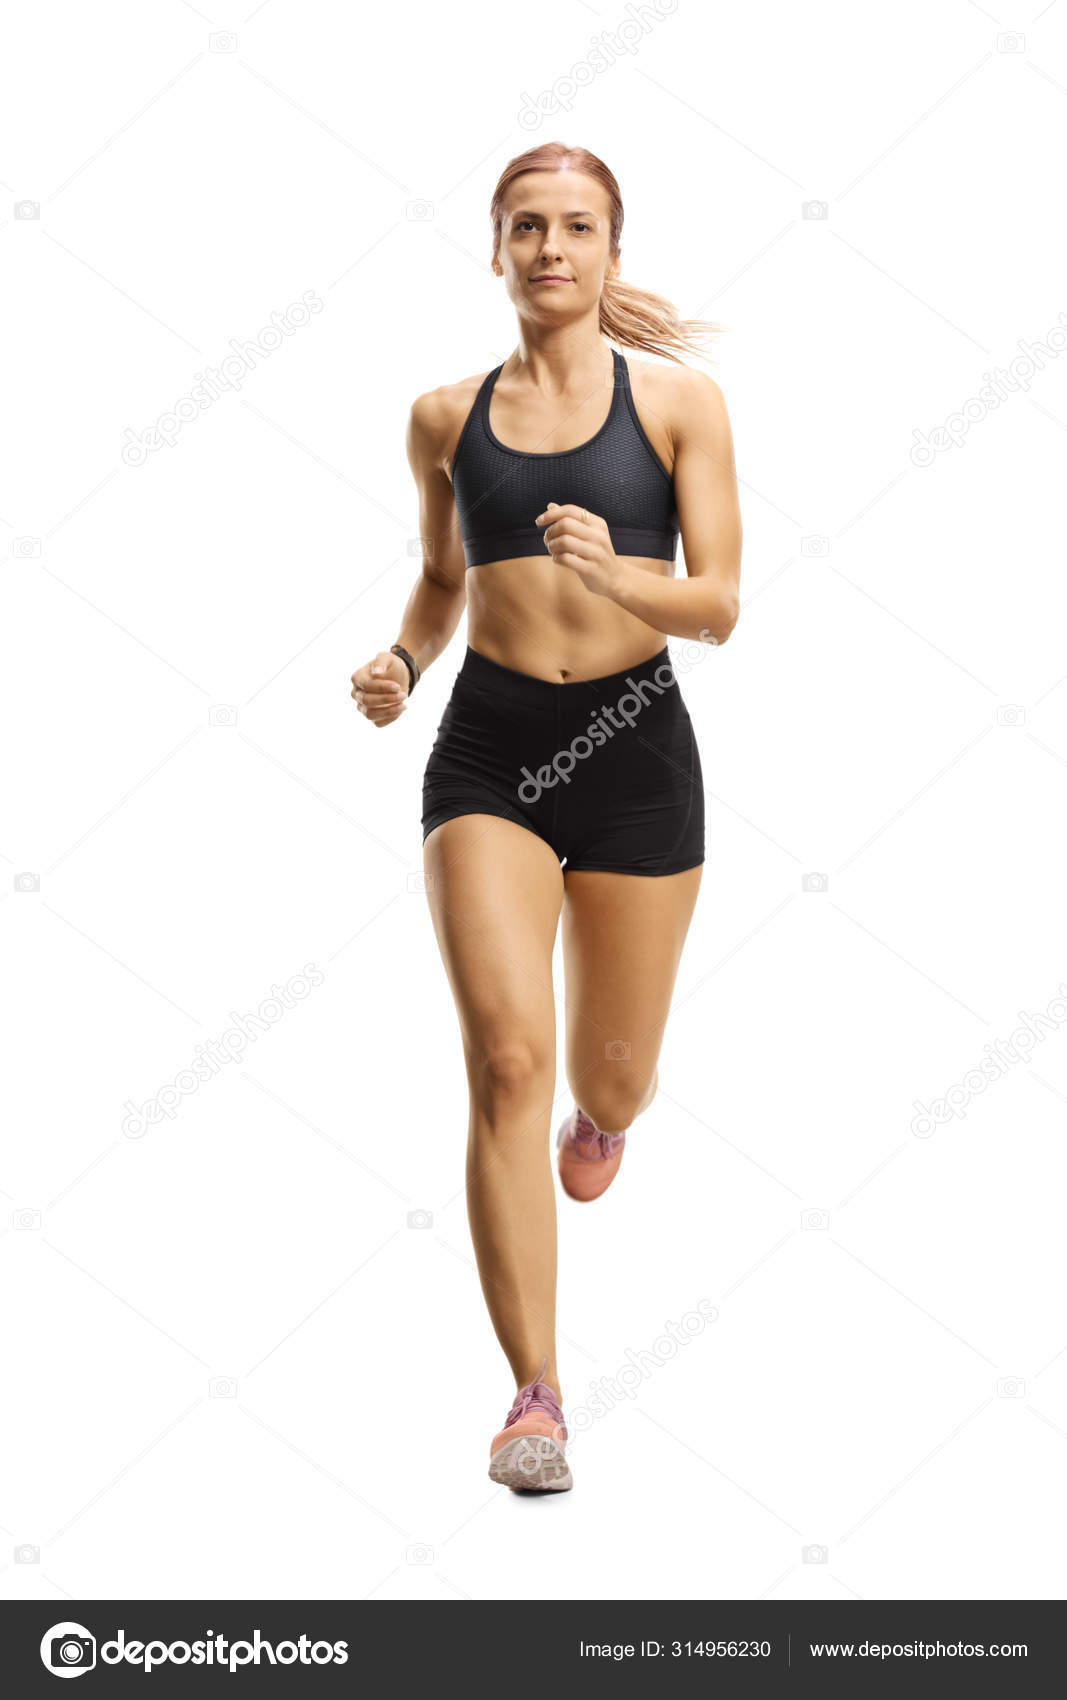 https://st4.depositphotos.com/3332767/31495/i/1600/depositphotos_314956230-stock-photo-female-athlete-in-running-outfit.jpg